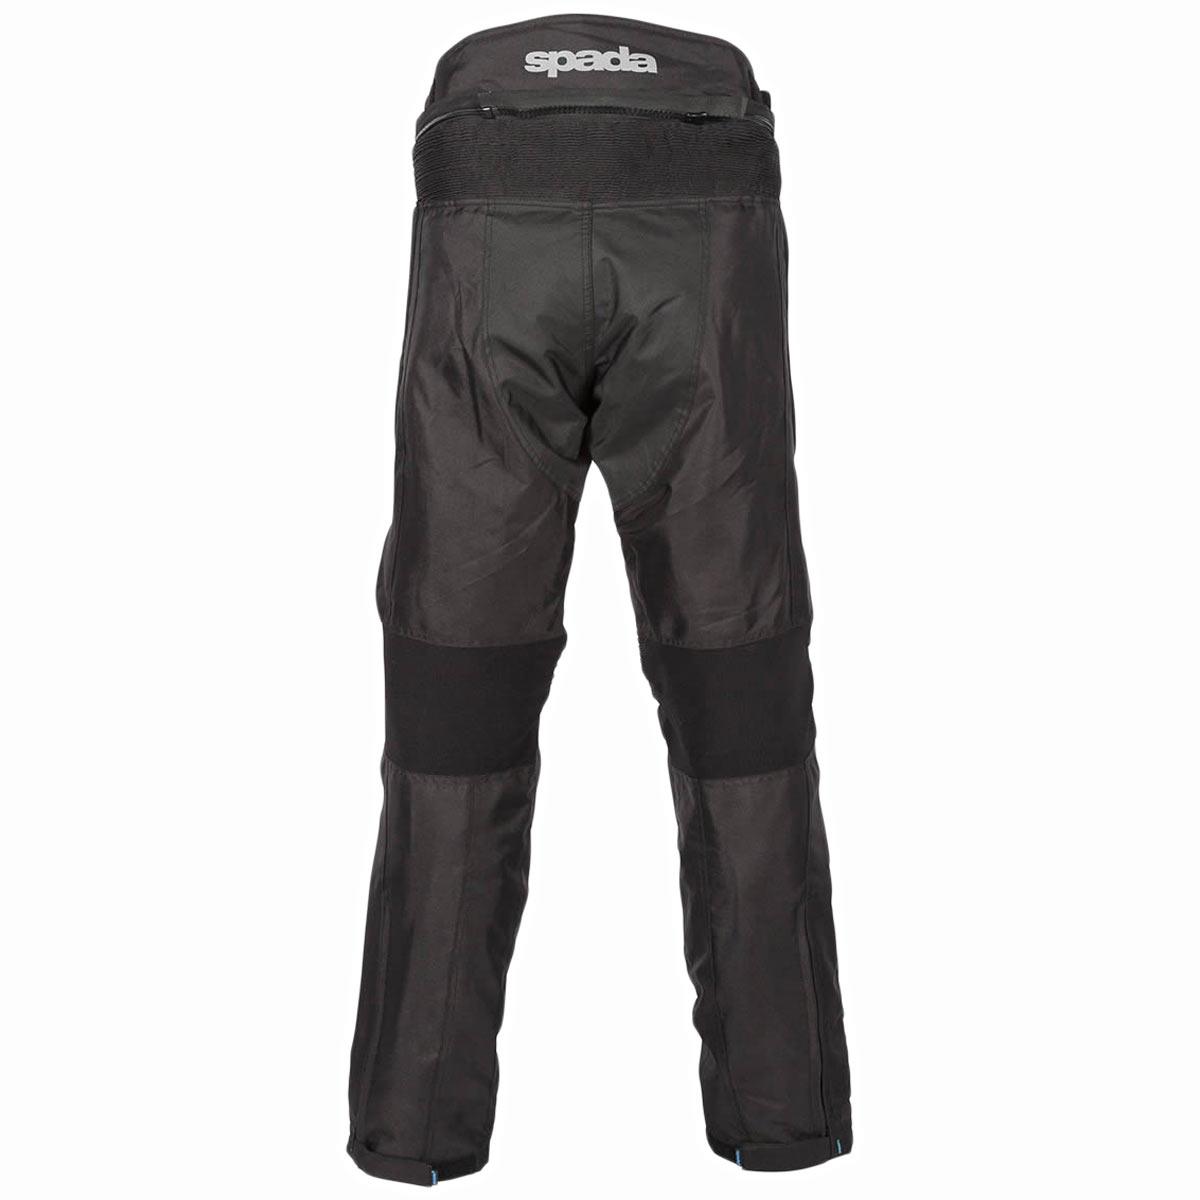 Spada Modena Trousers Short Leg WP Black - Motorcycle Trousers